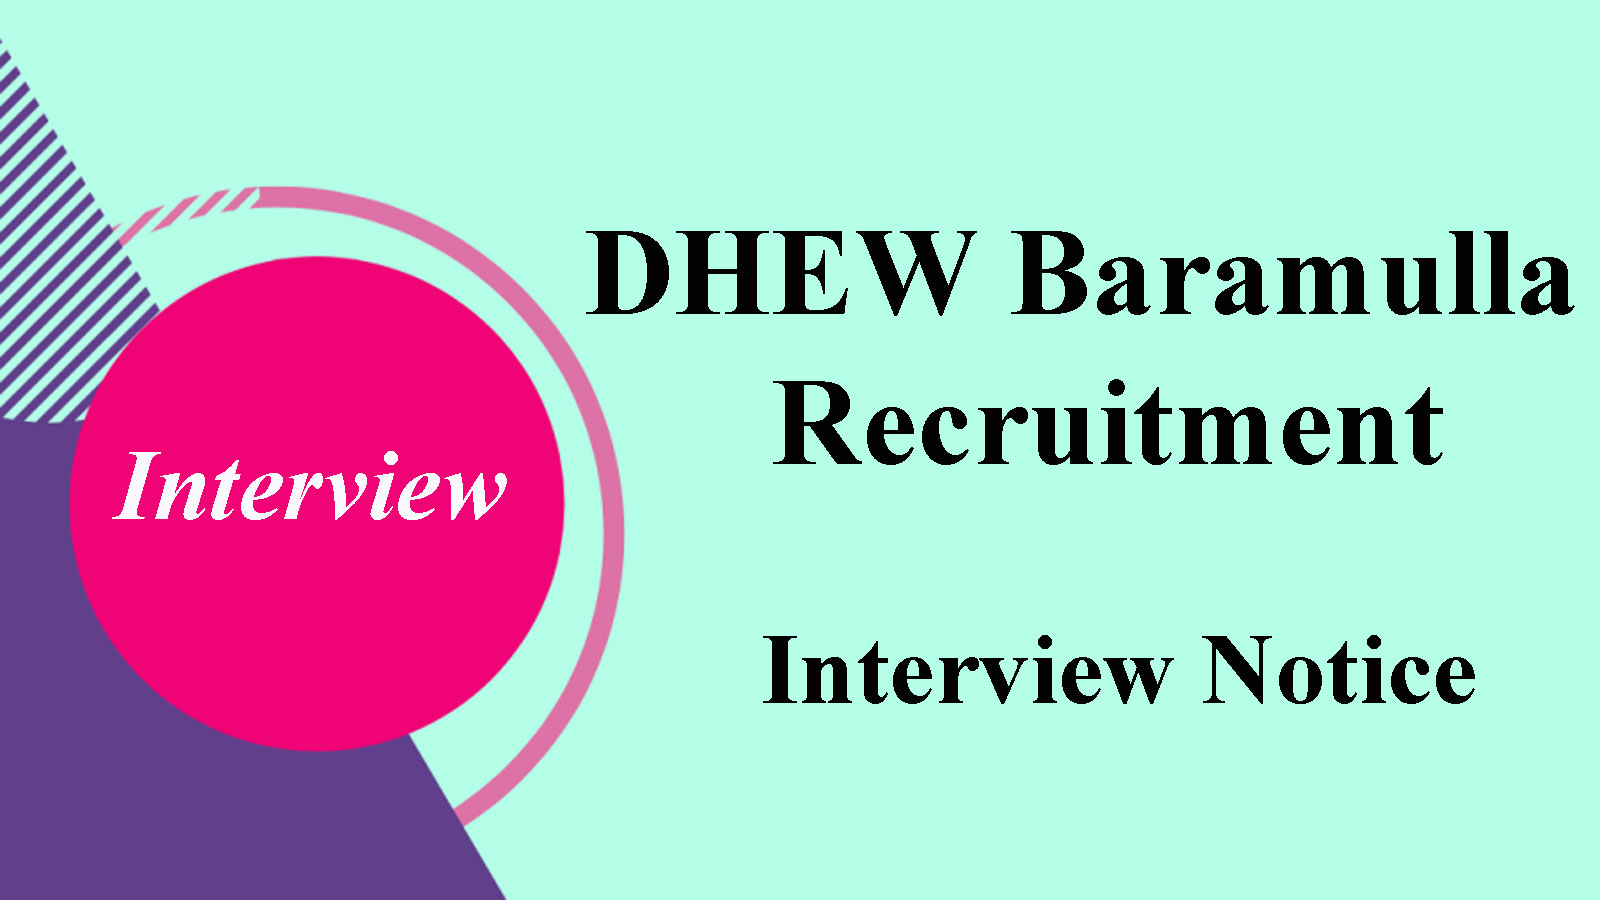 DHEW Baramulla Recruitment, Interview on Nov 19